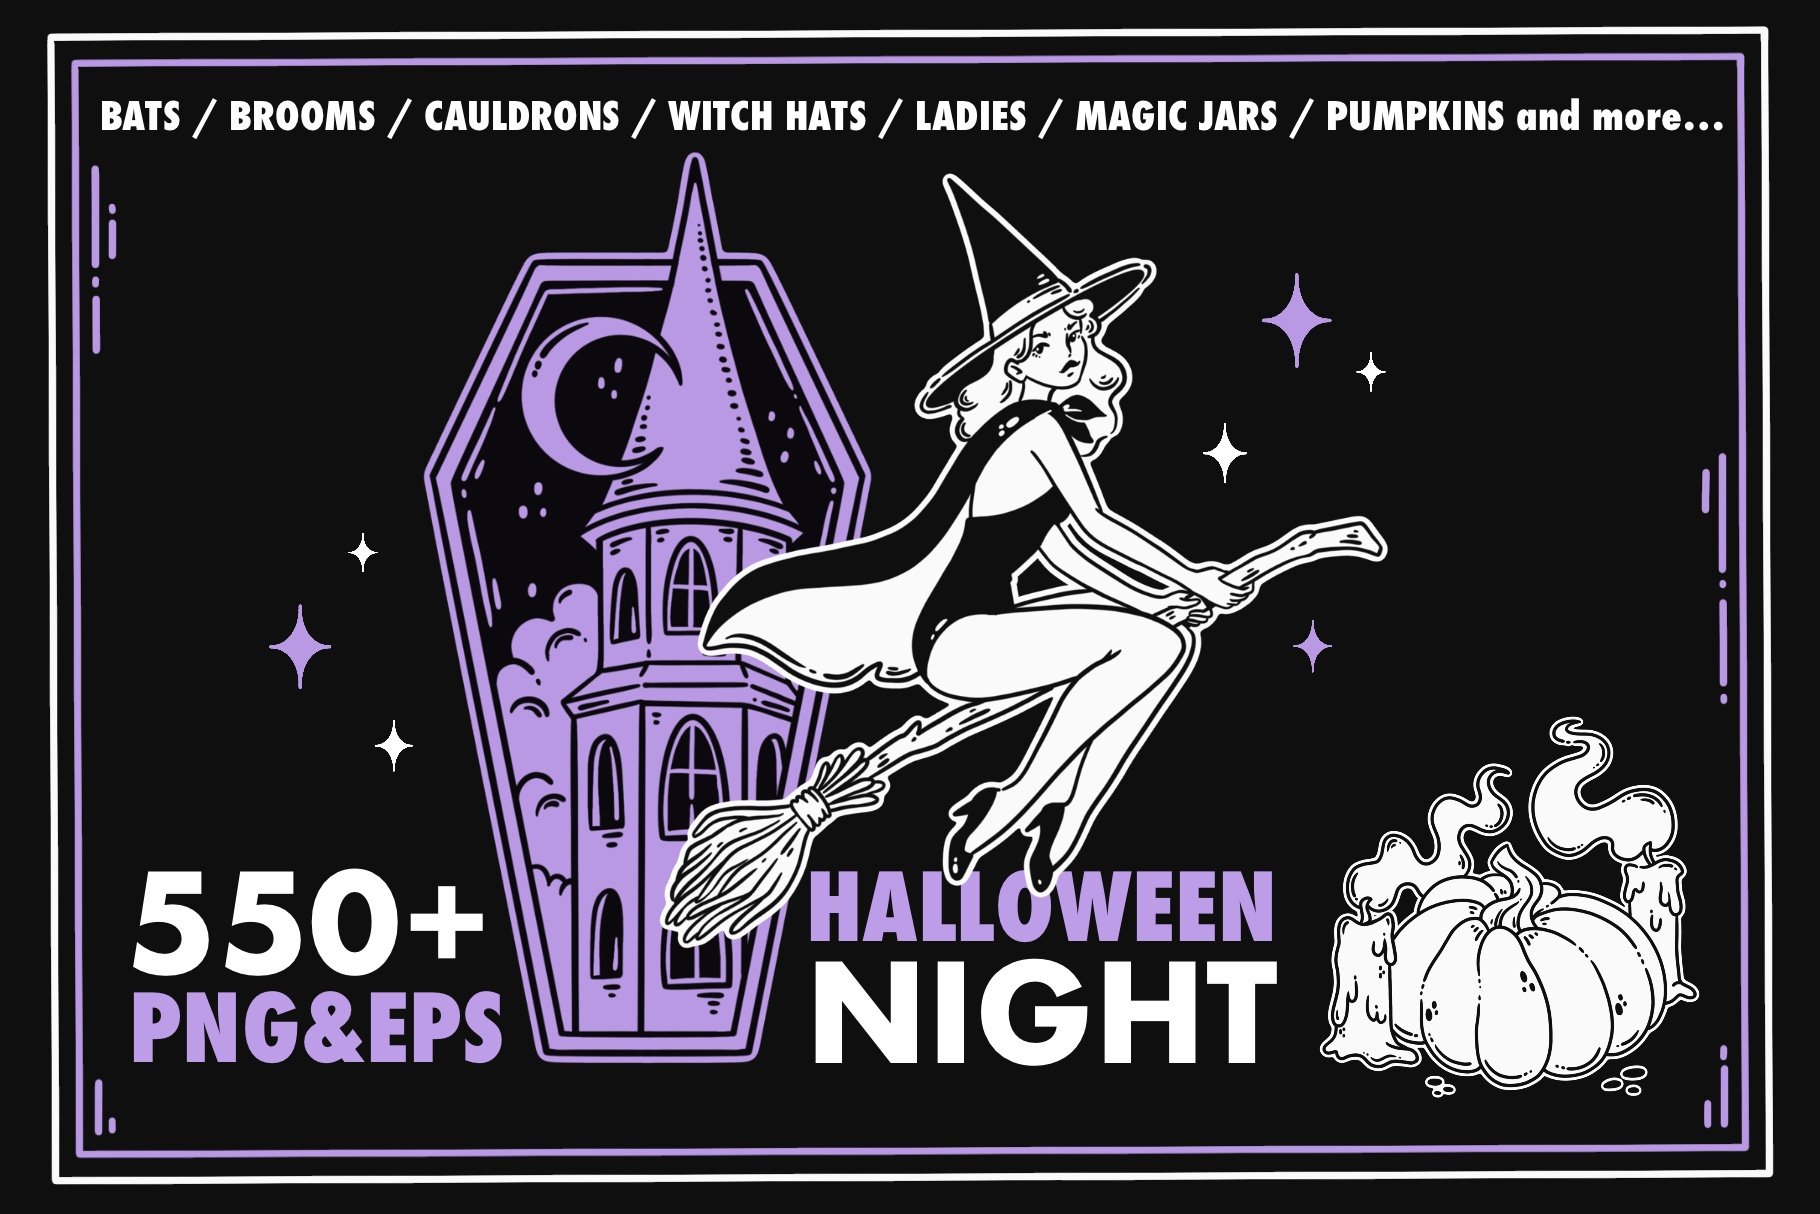 Halloween night cover image.